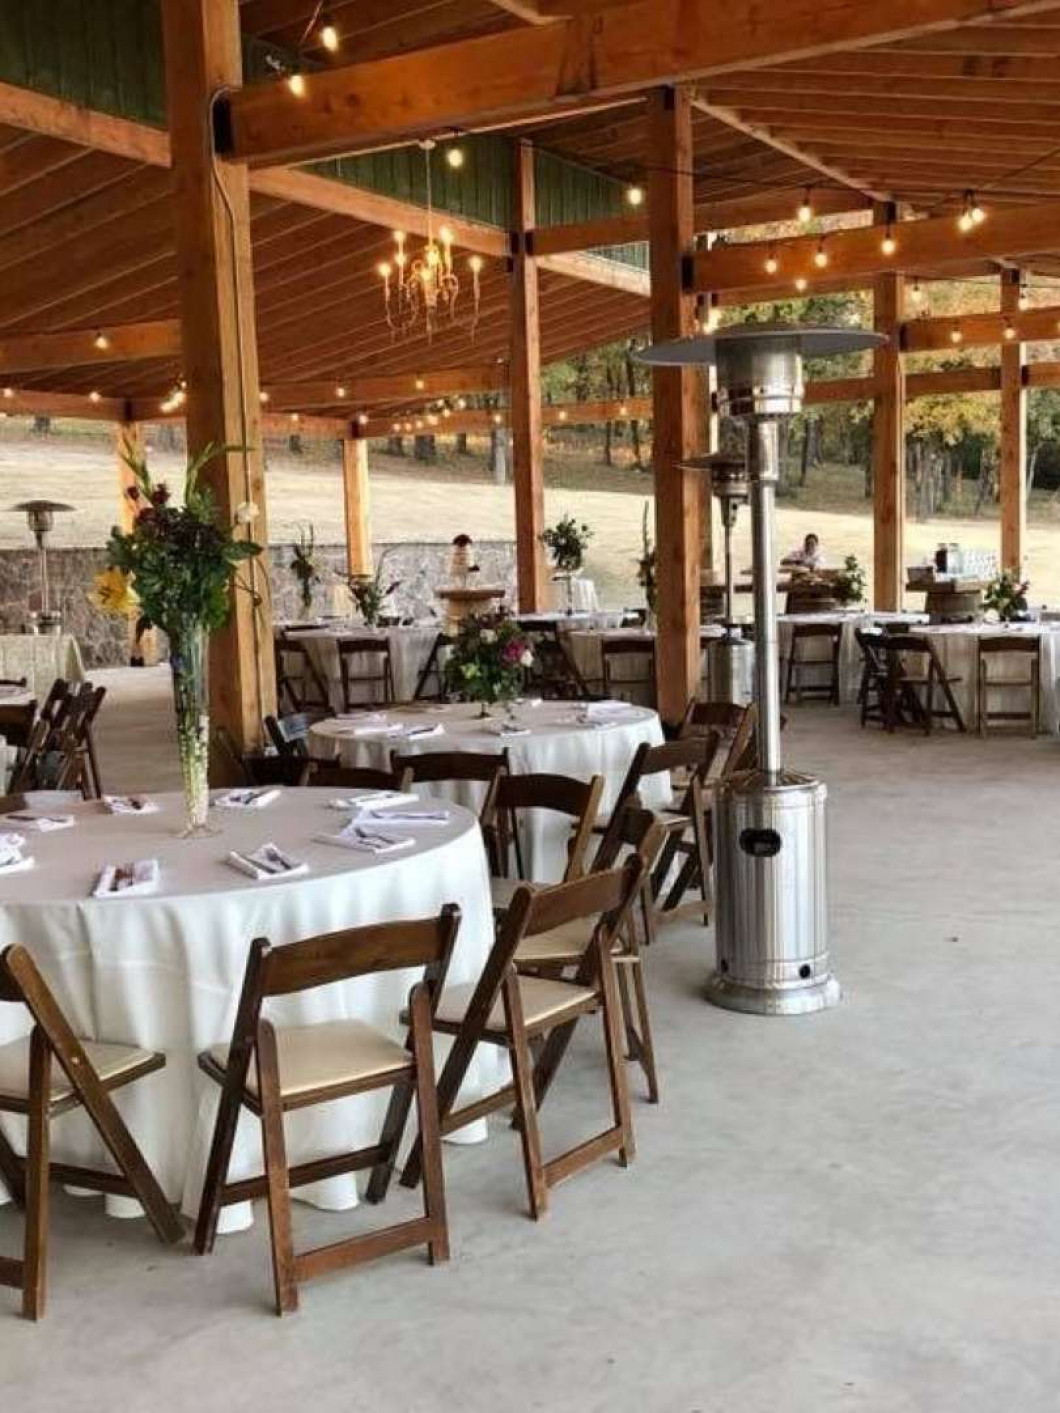 Silver Star Ranch And Venue Weddings Quincea Eras A Rustic Shabby Shic Venue That Serves